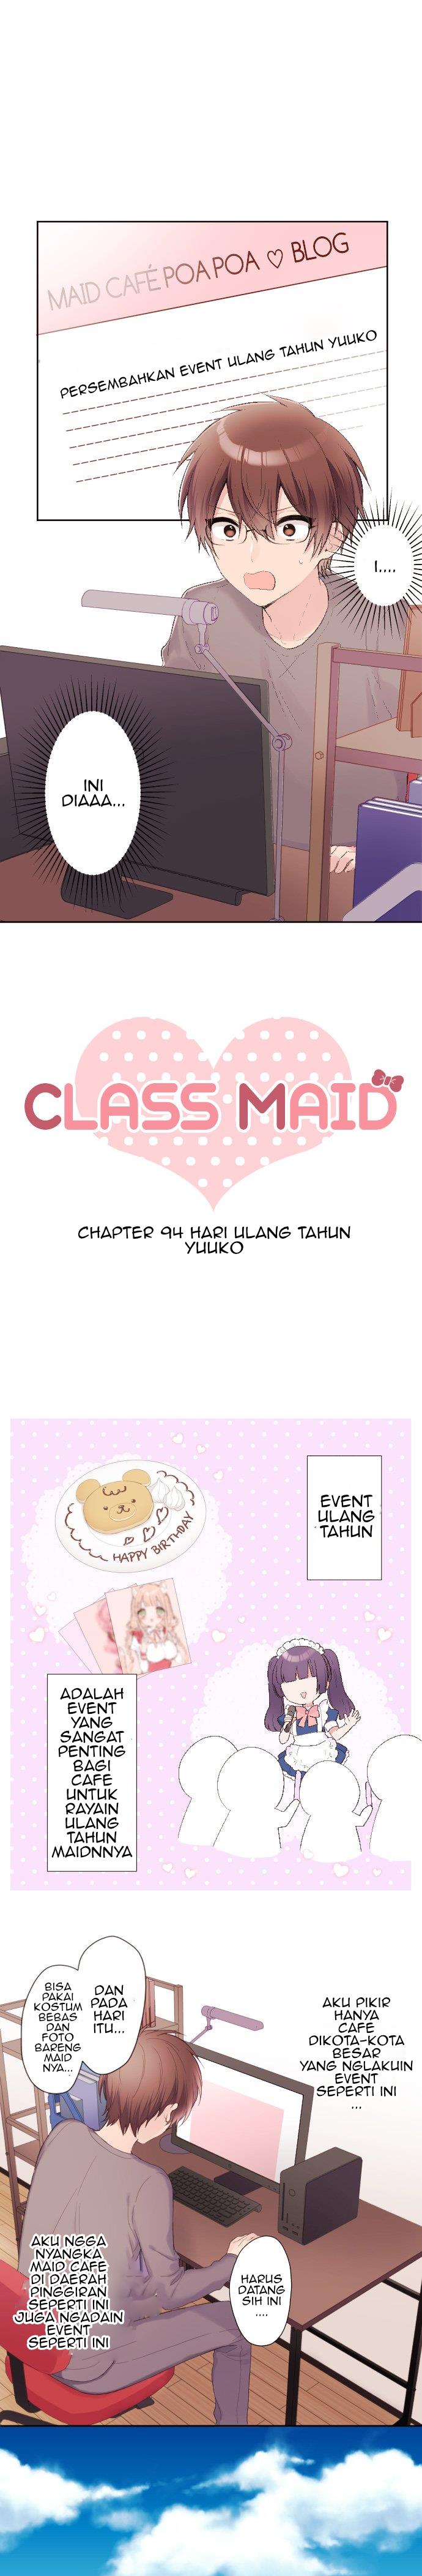 Class Maid (Shimamura) Chapter 94